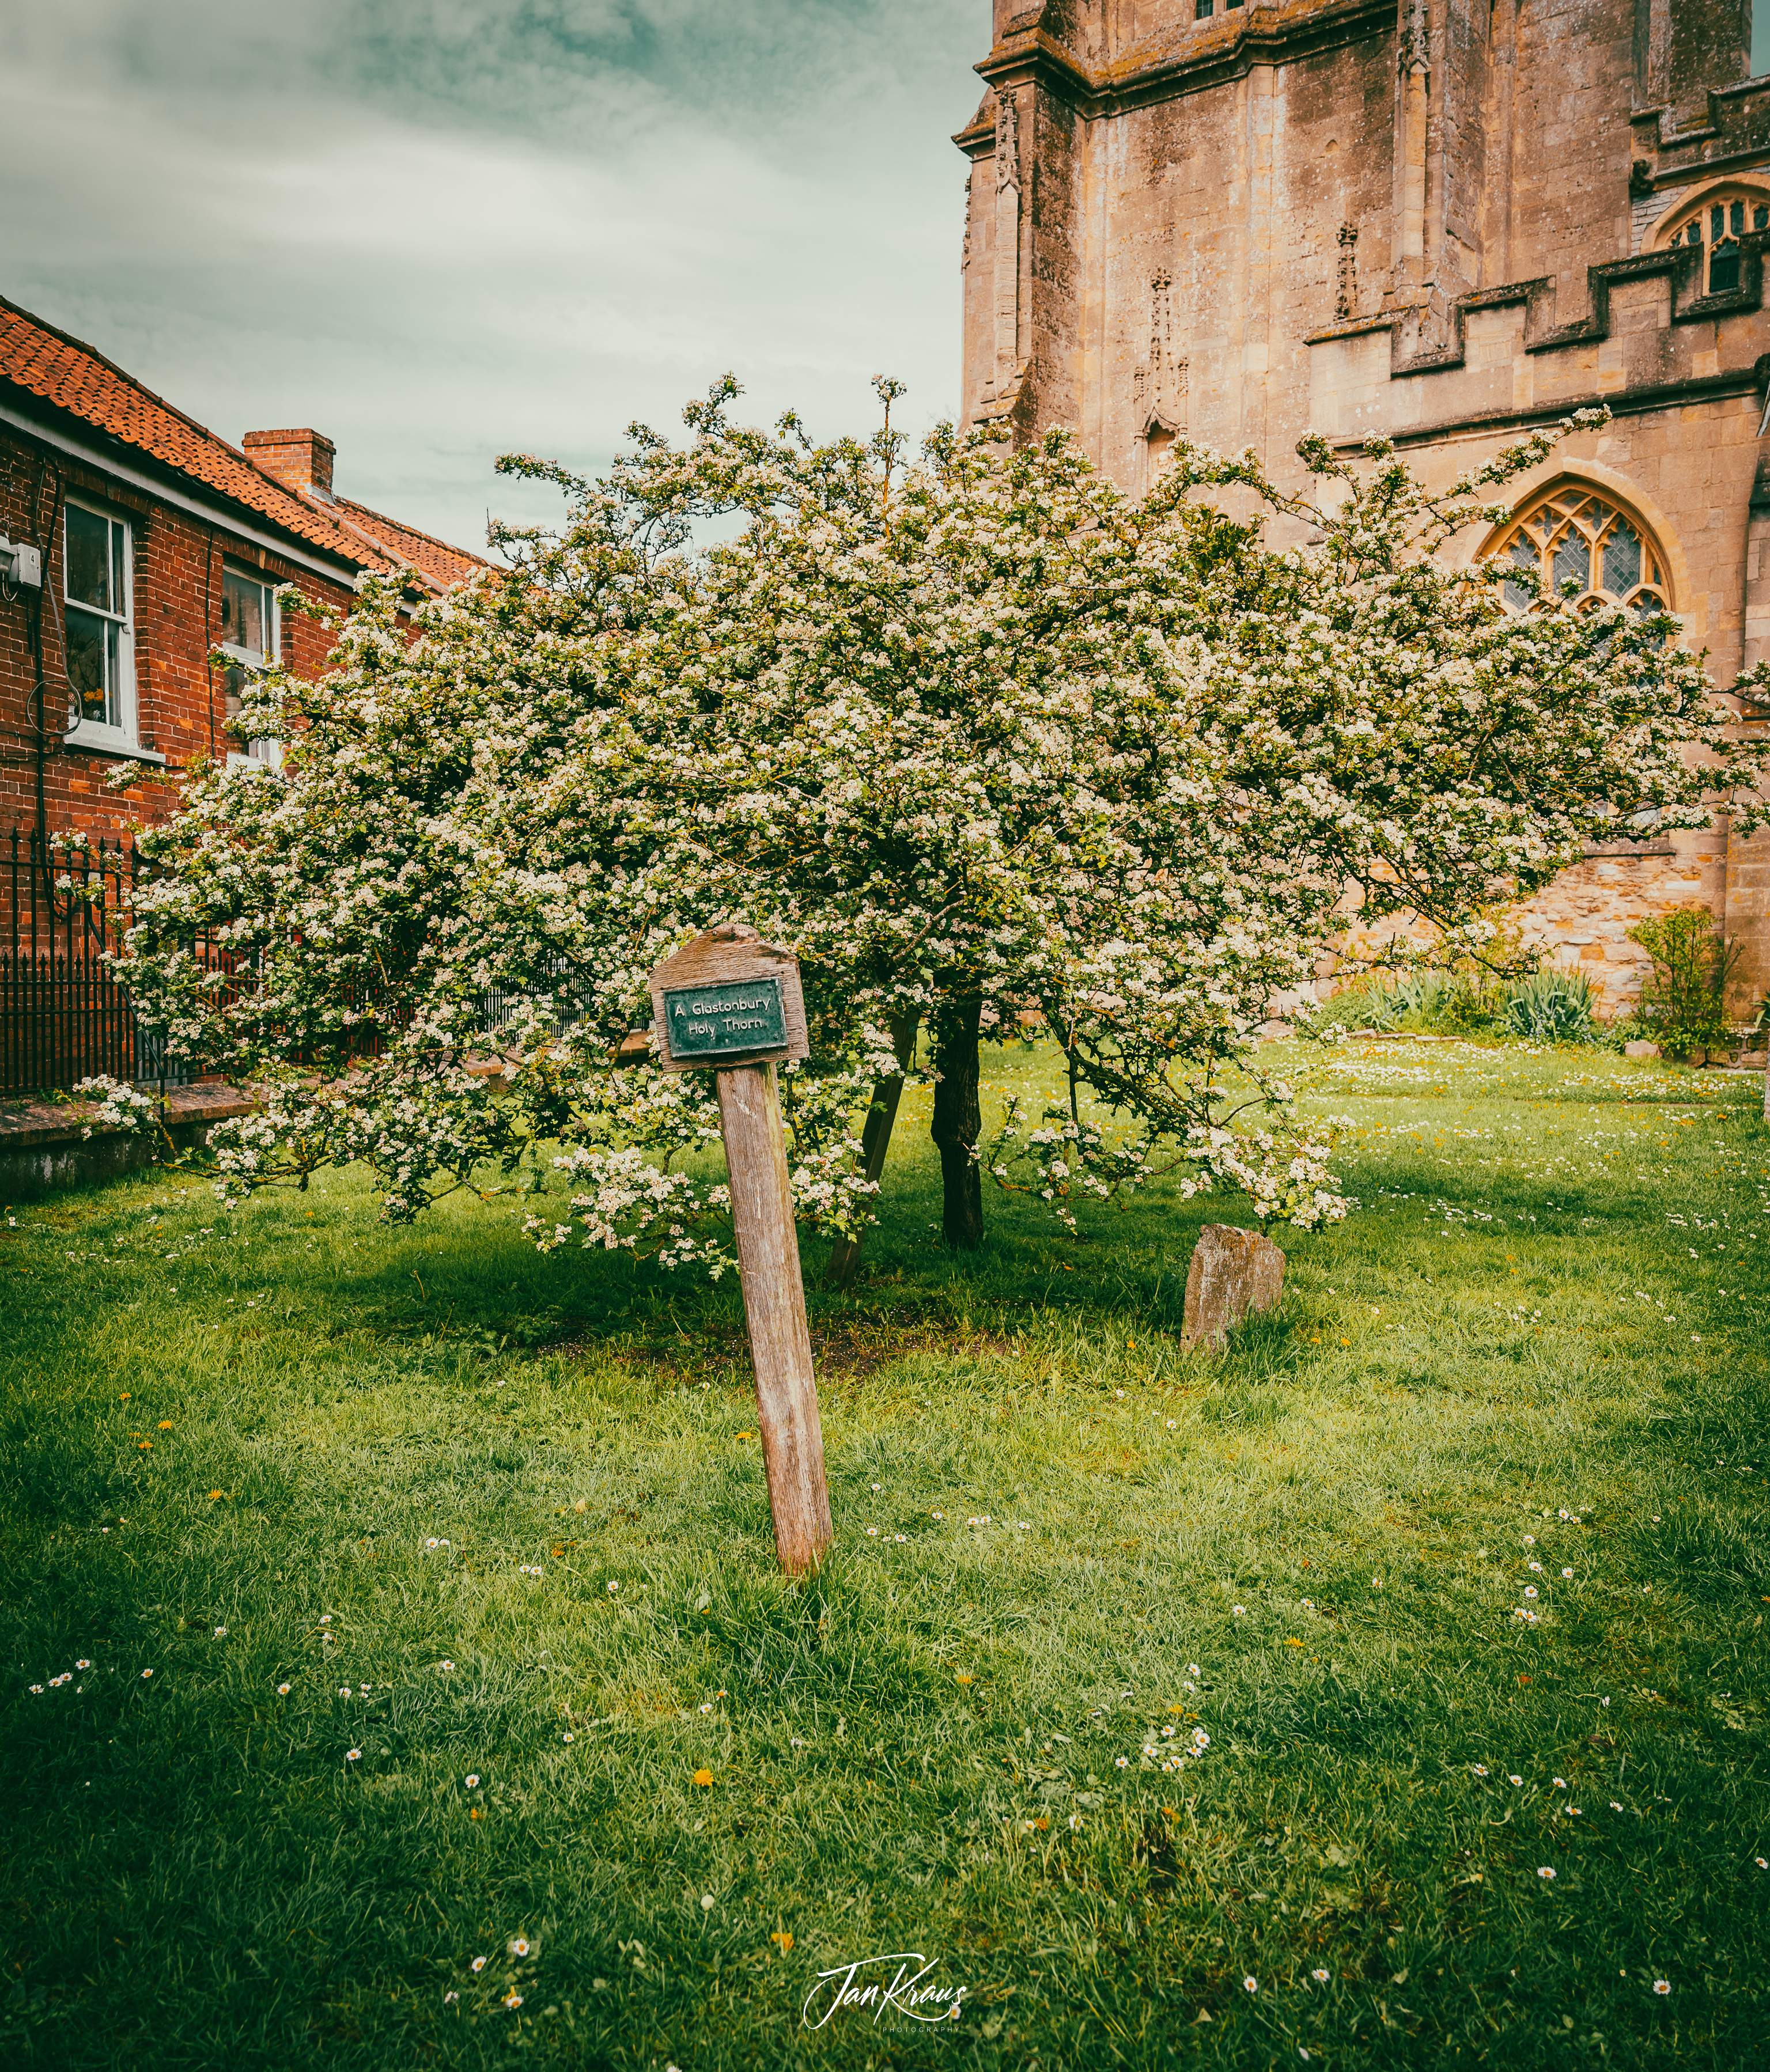 A Glastonbury Holy Thorn outside St John the Baptist's Church, Glastonbury, Somerset, England, UK